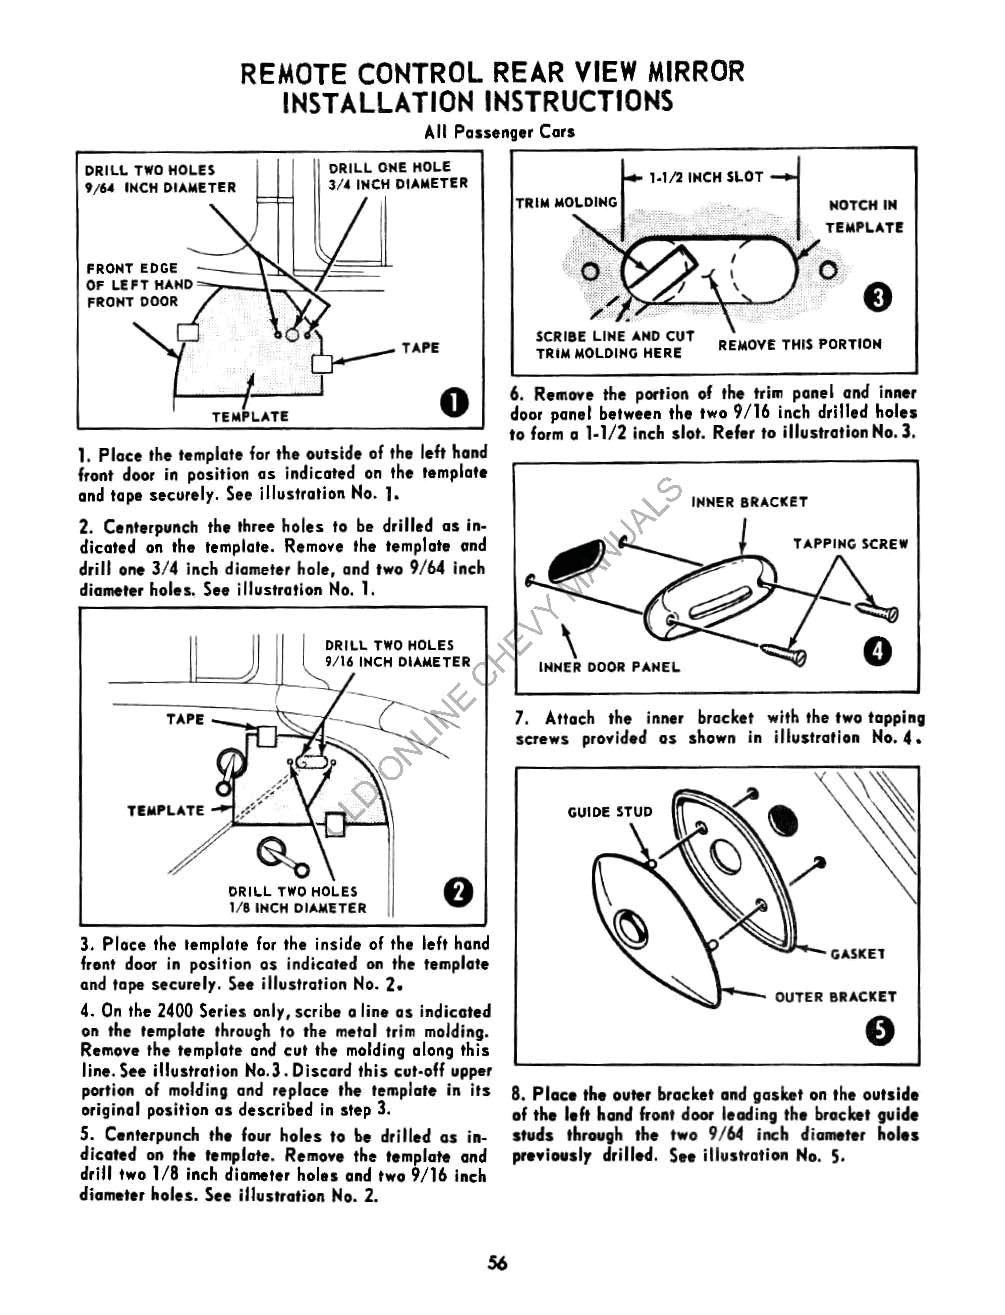 1955_Chevrolet_Acc_Manual-56